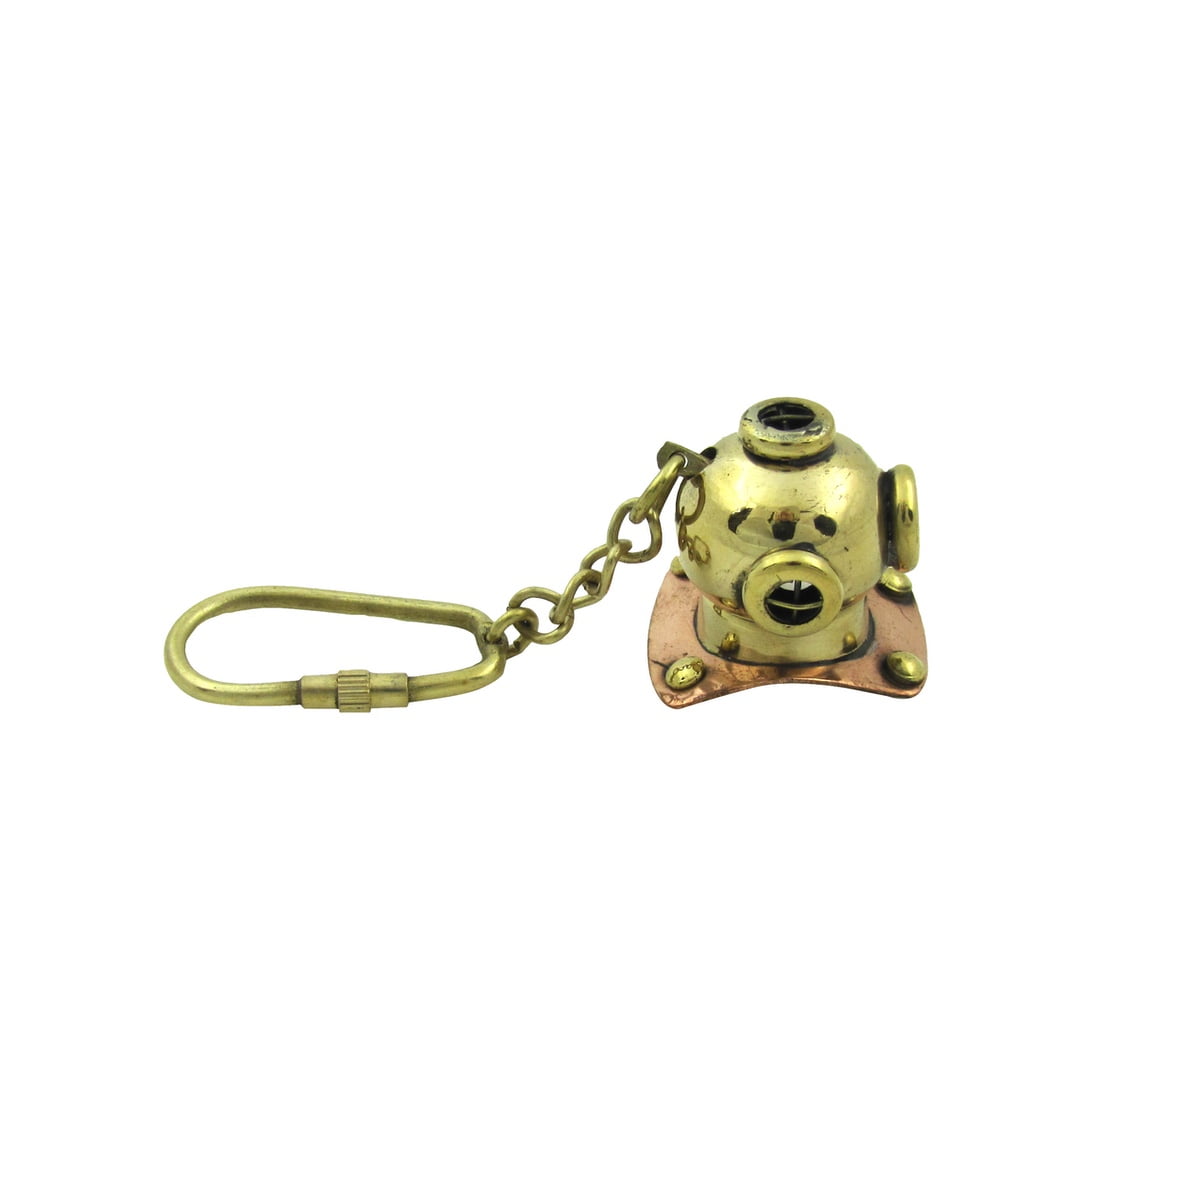 Nautical Brass Telescope Key Chain Antique Handmade Key Ring Lot Of 50 Pcs Gift